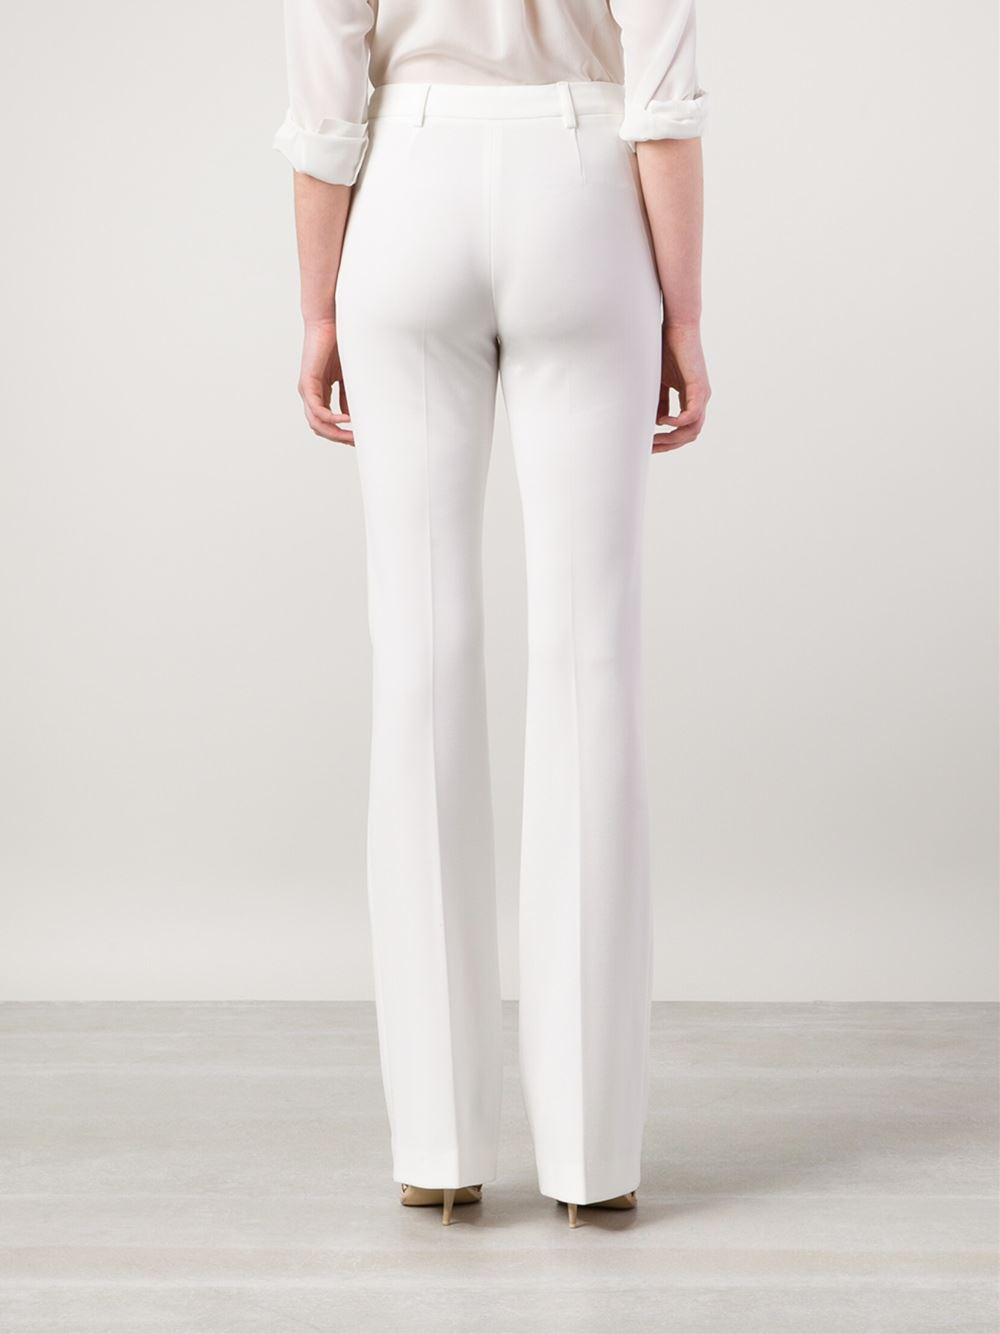 Lyst - Alberta Ferretti Wide Leg Trousers in White